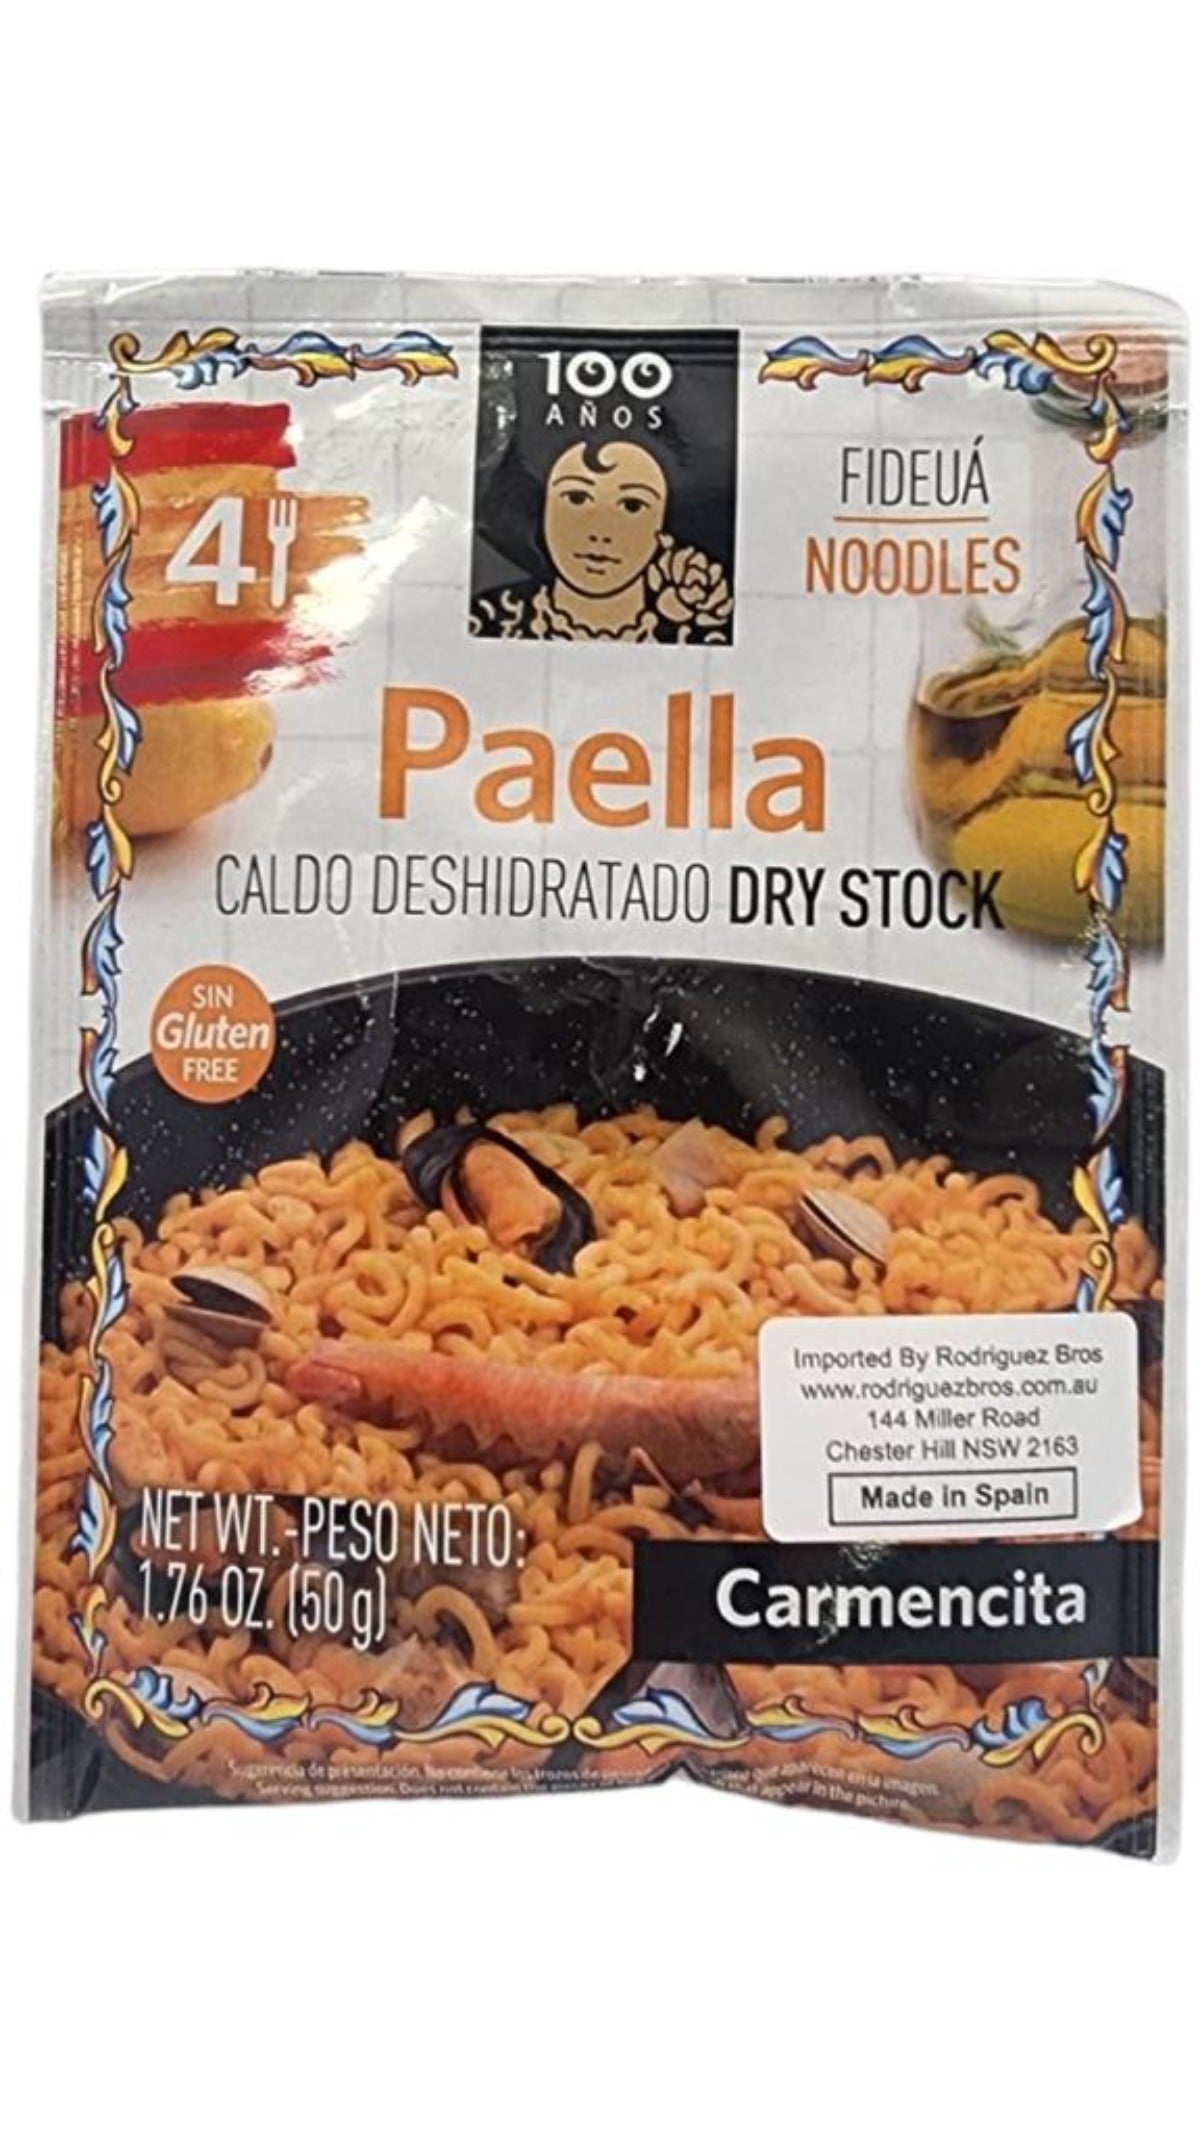 Carmencita Fideua Noodles Dry Paella Stock 50g